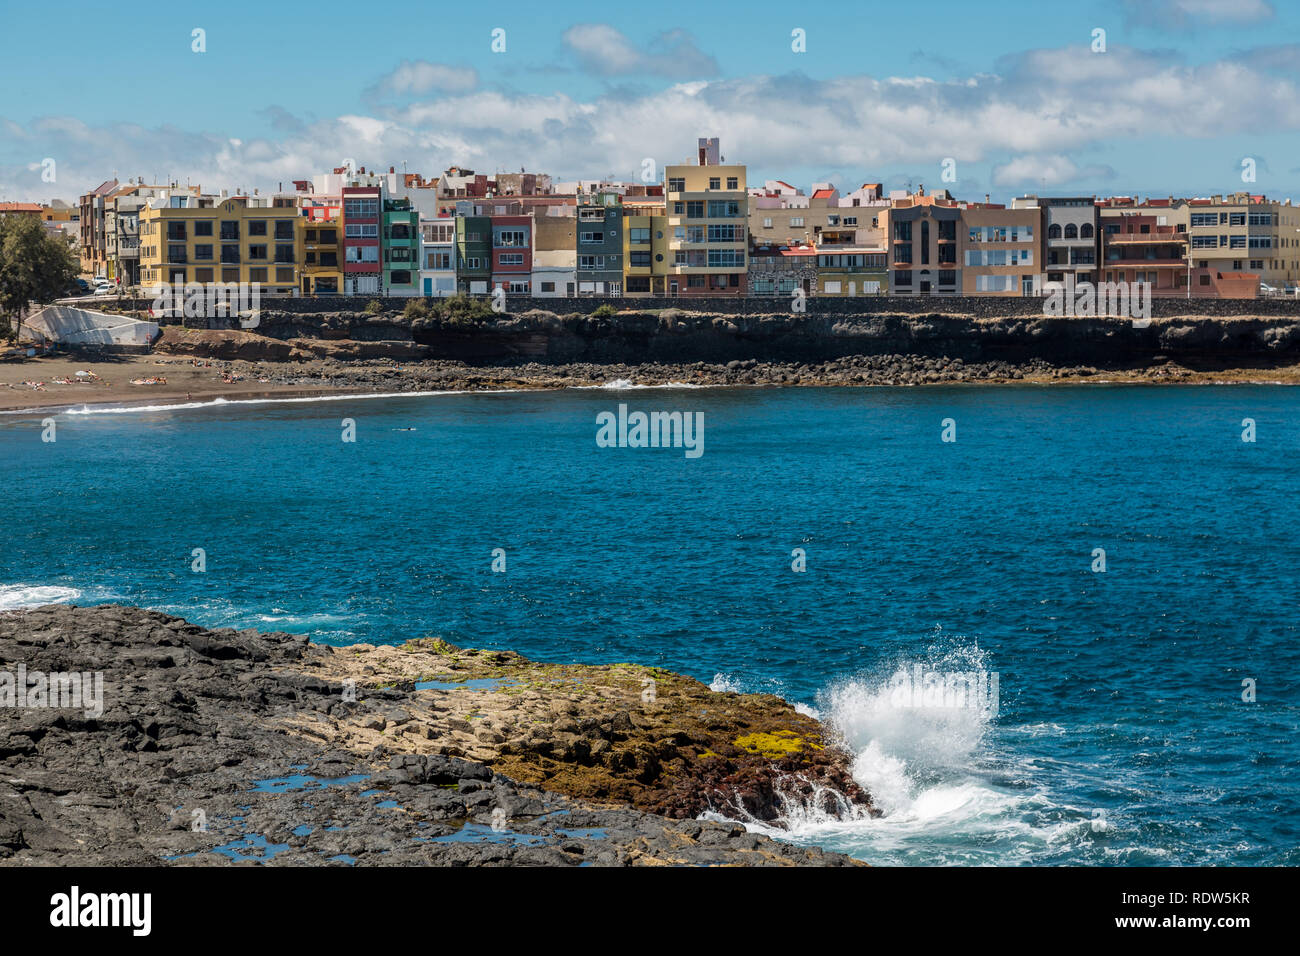 Coastal village of La Garita on the island of Gran Canaria Stock Photo